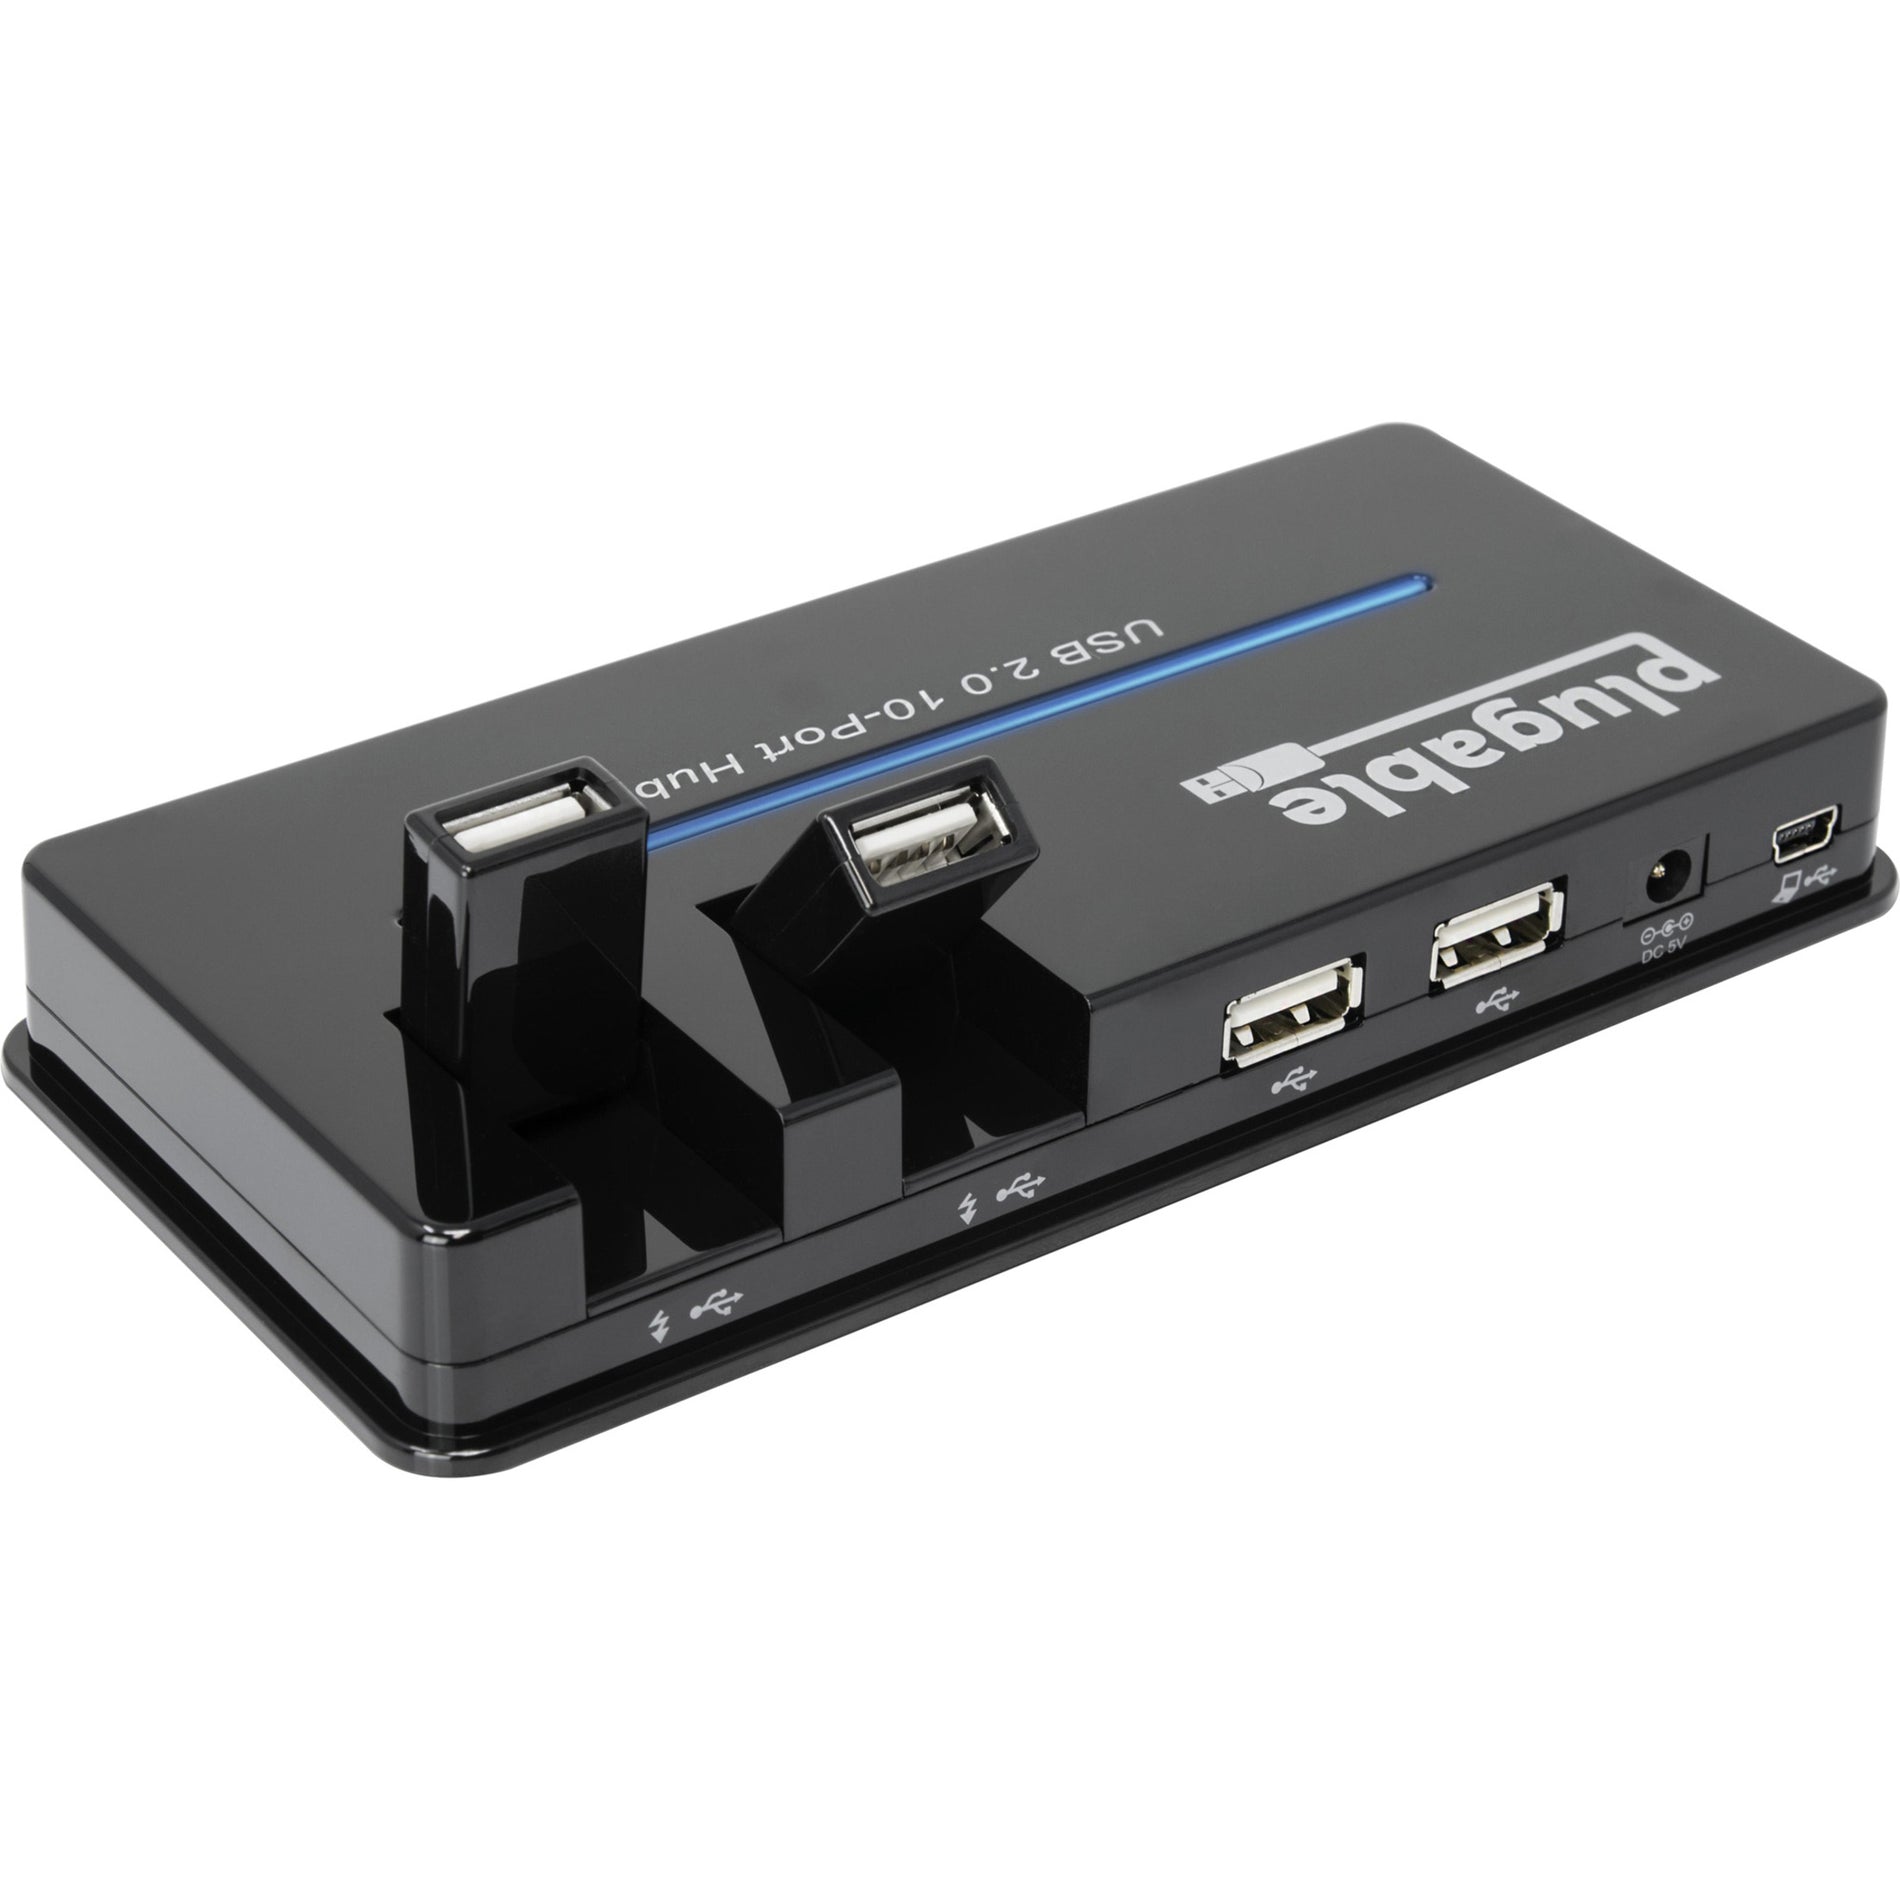 Plugable USB2-HUB10C2 USB 2.0 10-PORT HUB WITH 20W POWER ADAPTER, 10 Ports, PC/Mac/Linux Compatible